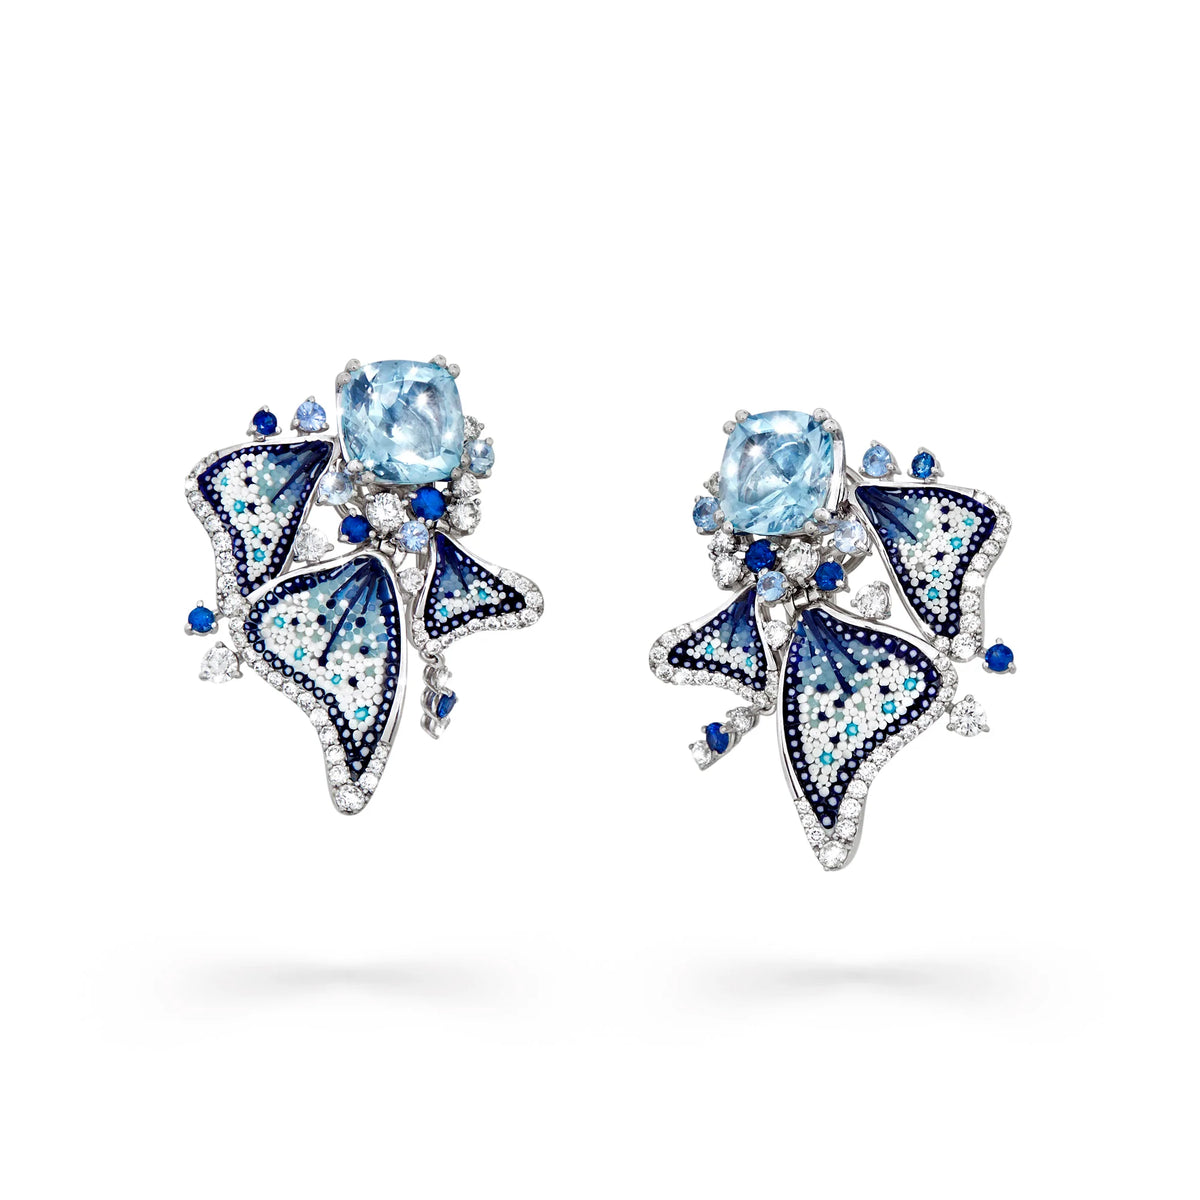 Earring white gold diamonds aquamarine sapphires